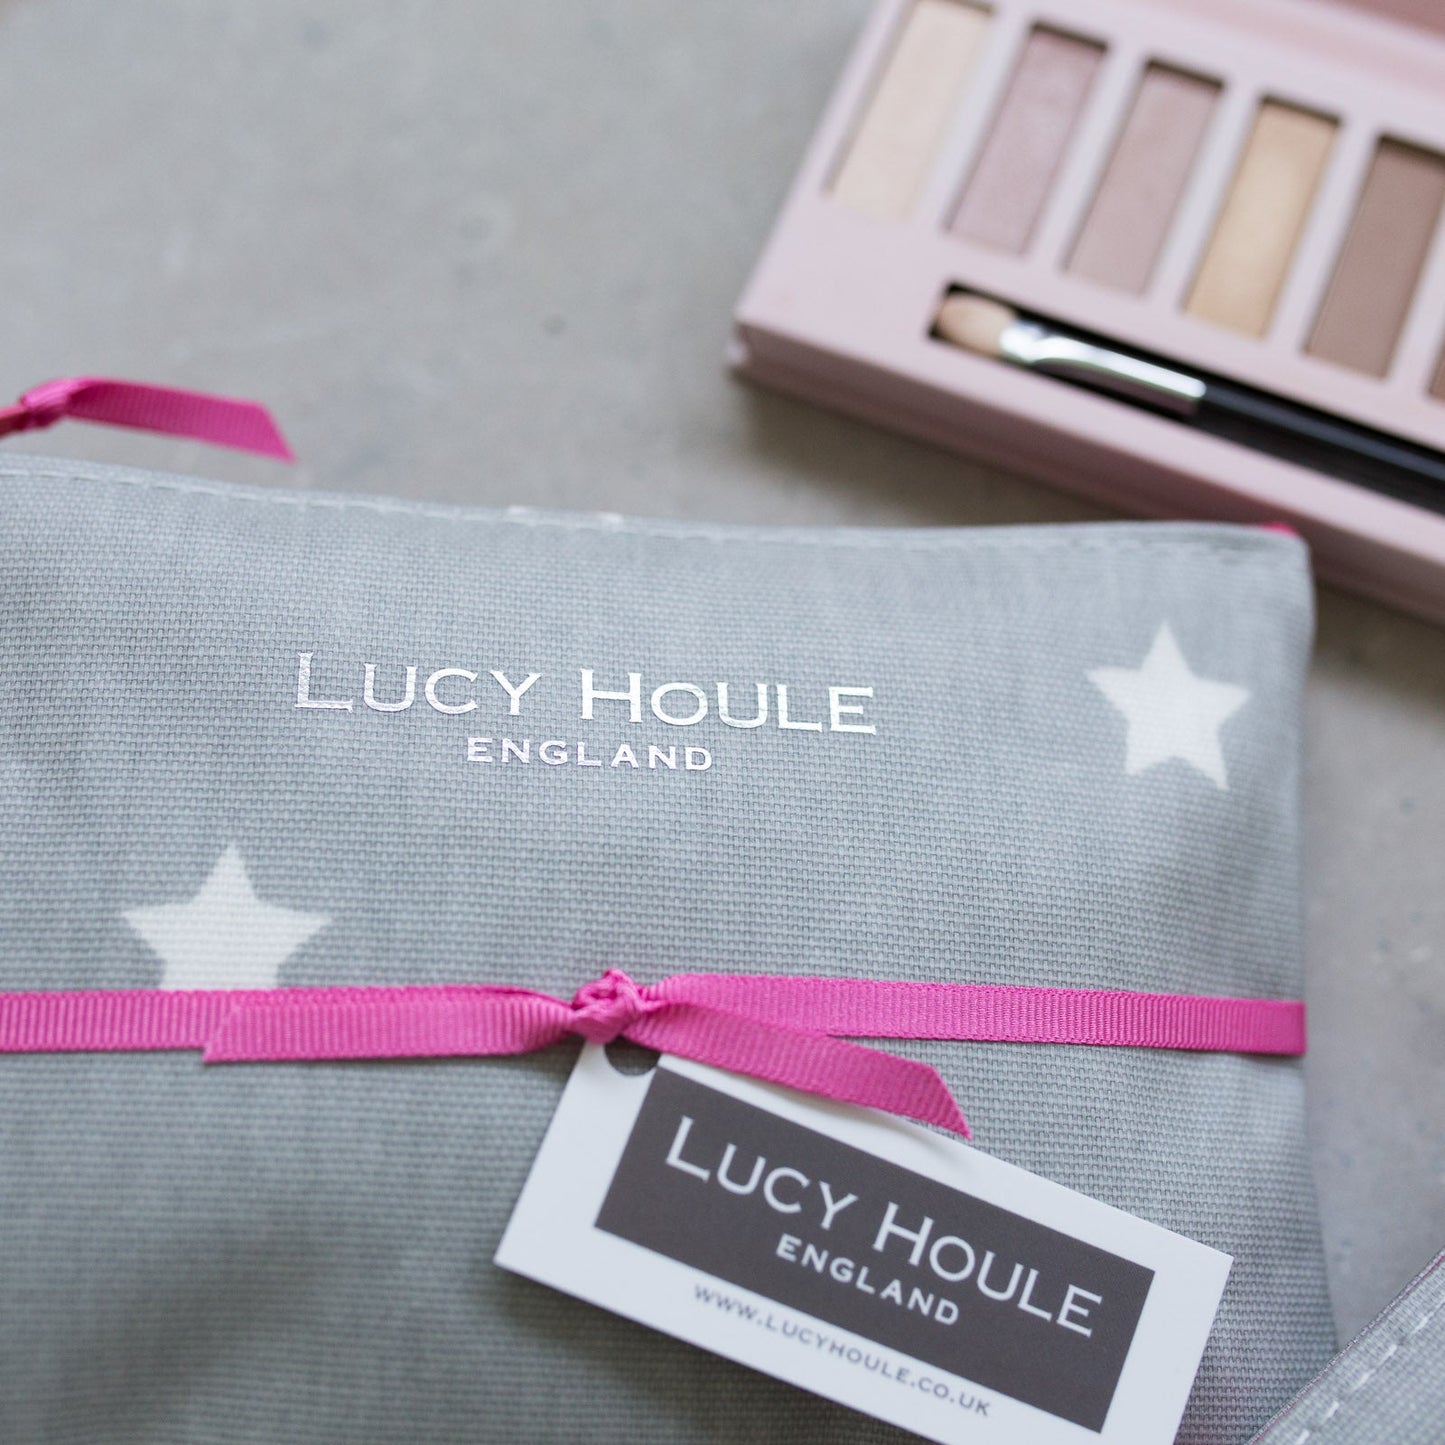 Grey & White Star Make-Up Bag with Pink Zip